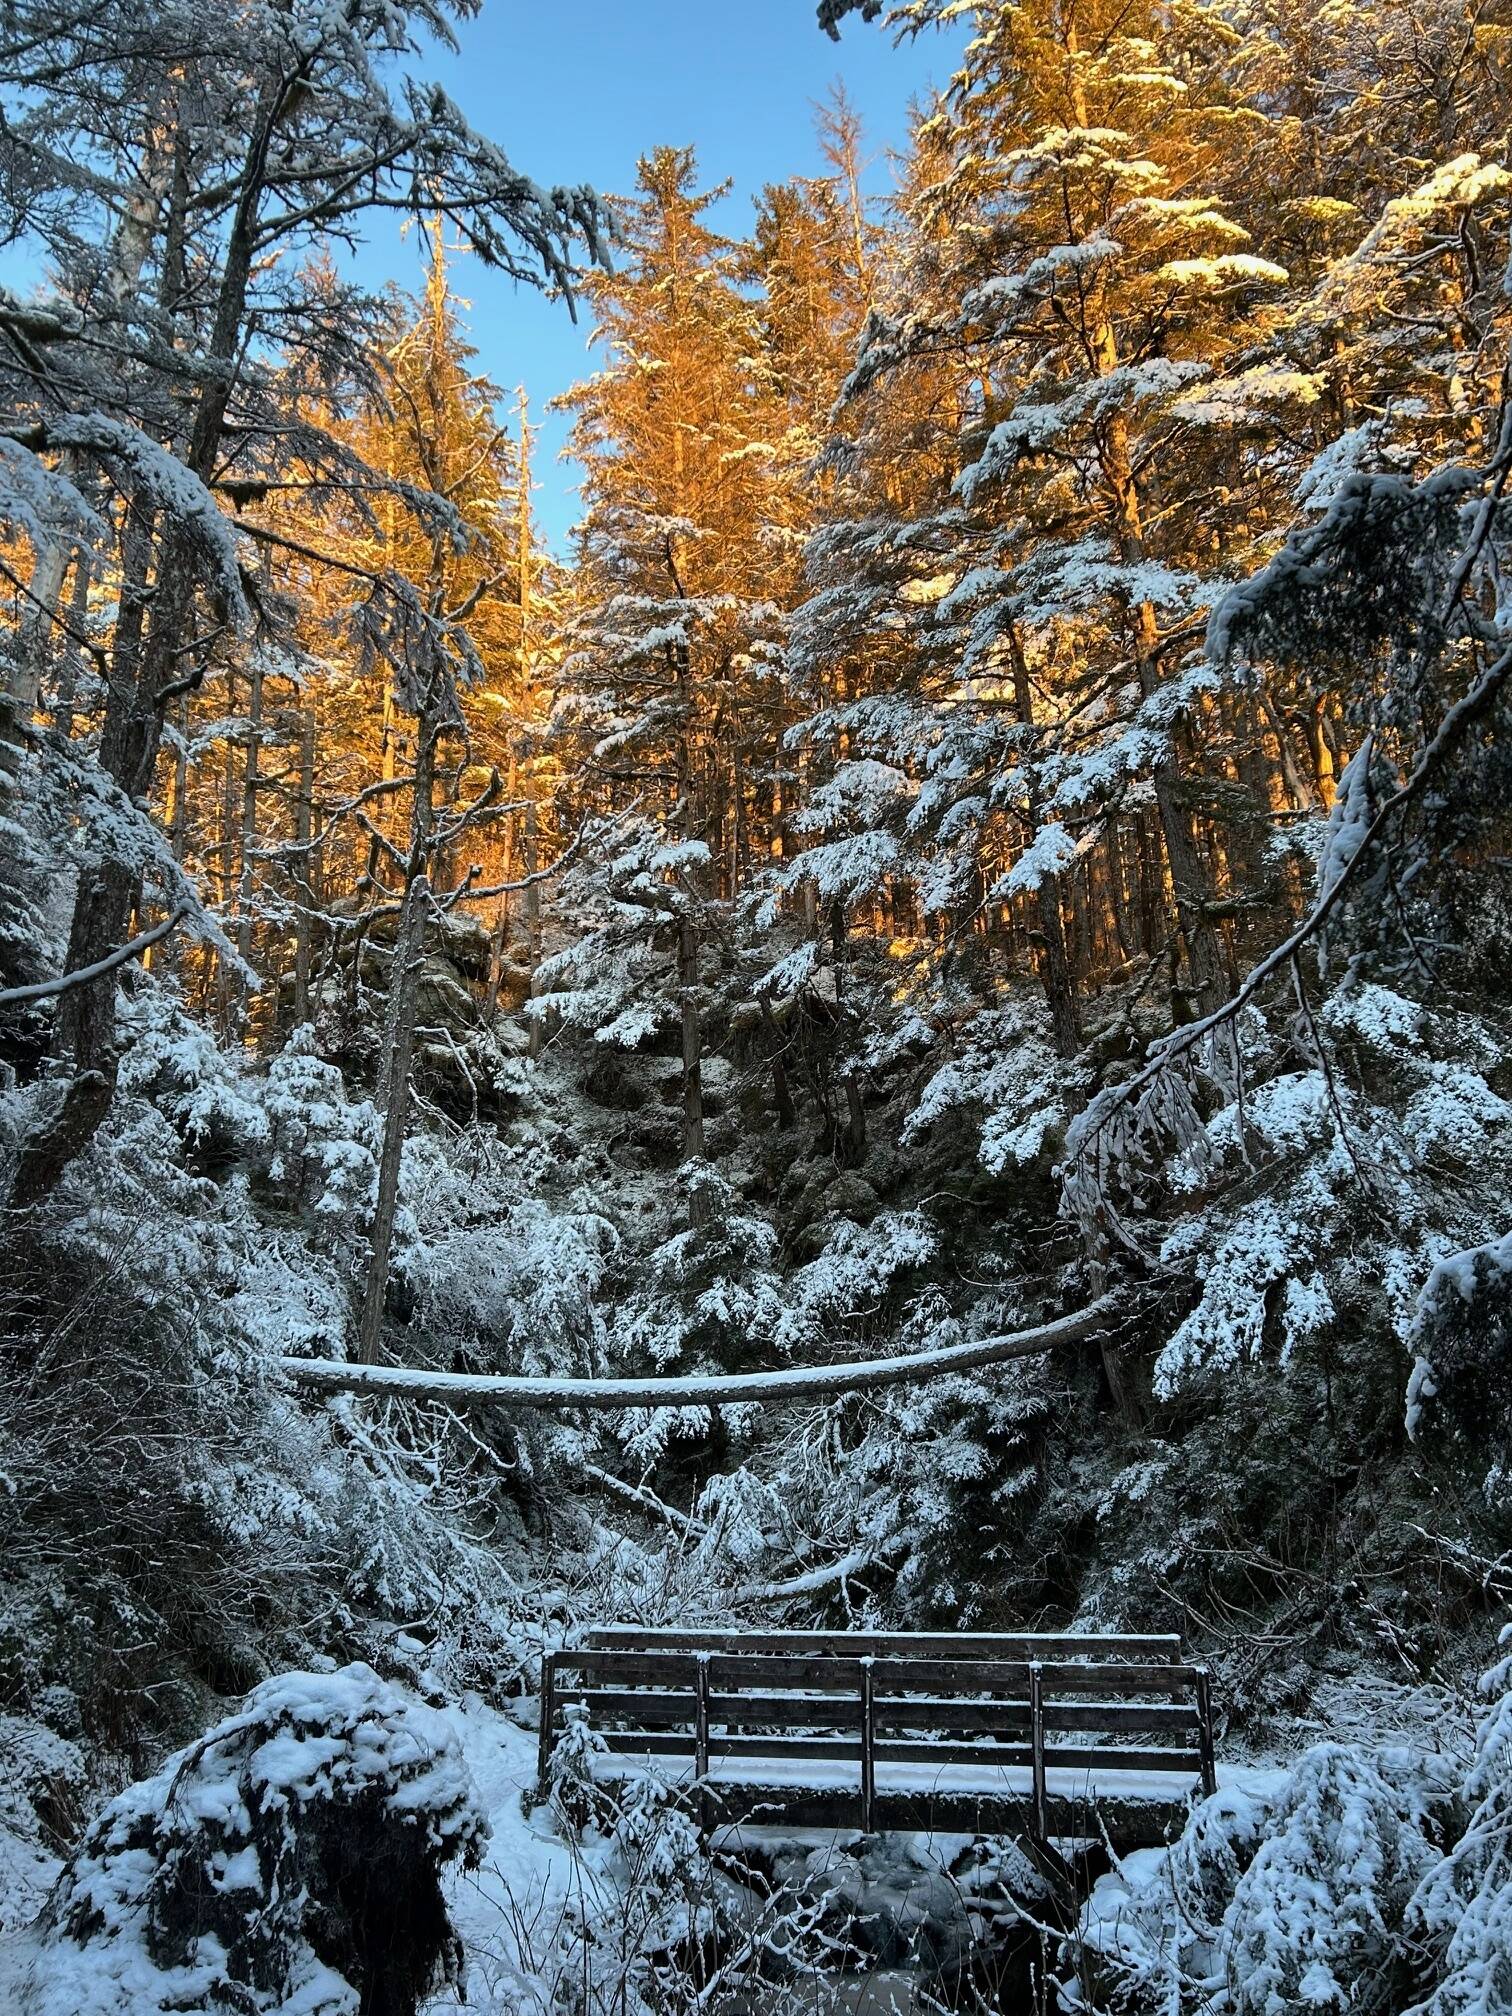 Photo by Deborah Rudis
Golden light along the John Muir Cabin Trail on Jan. 12.